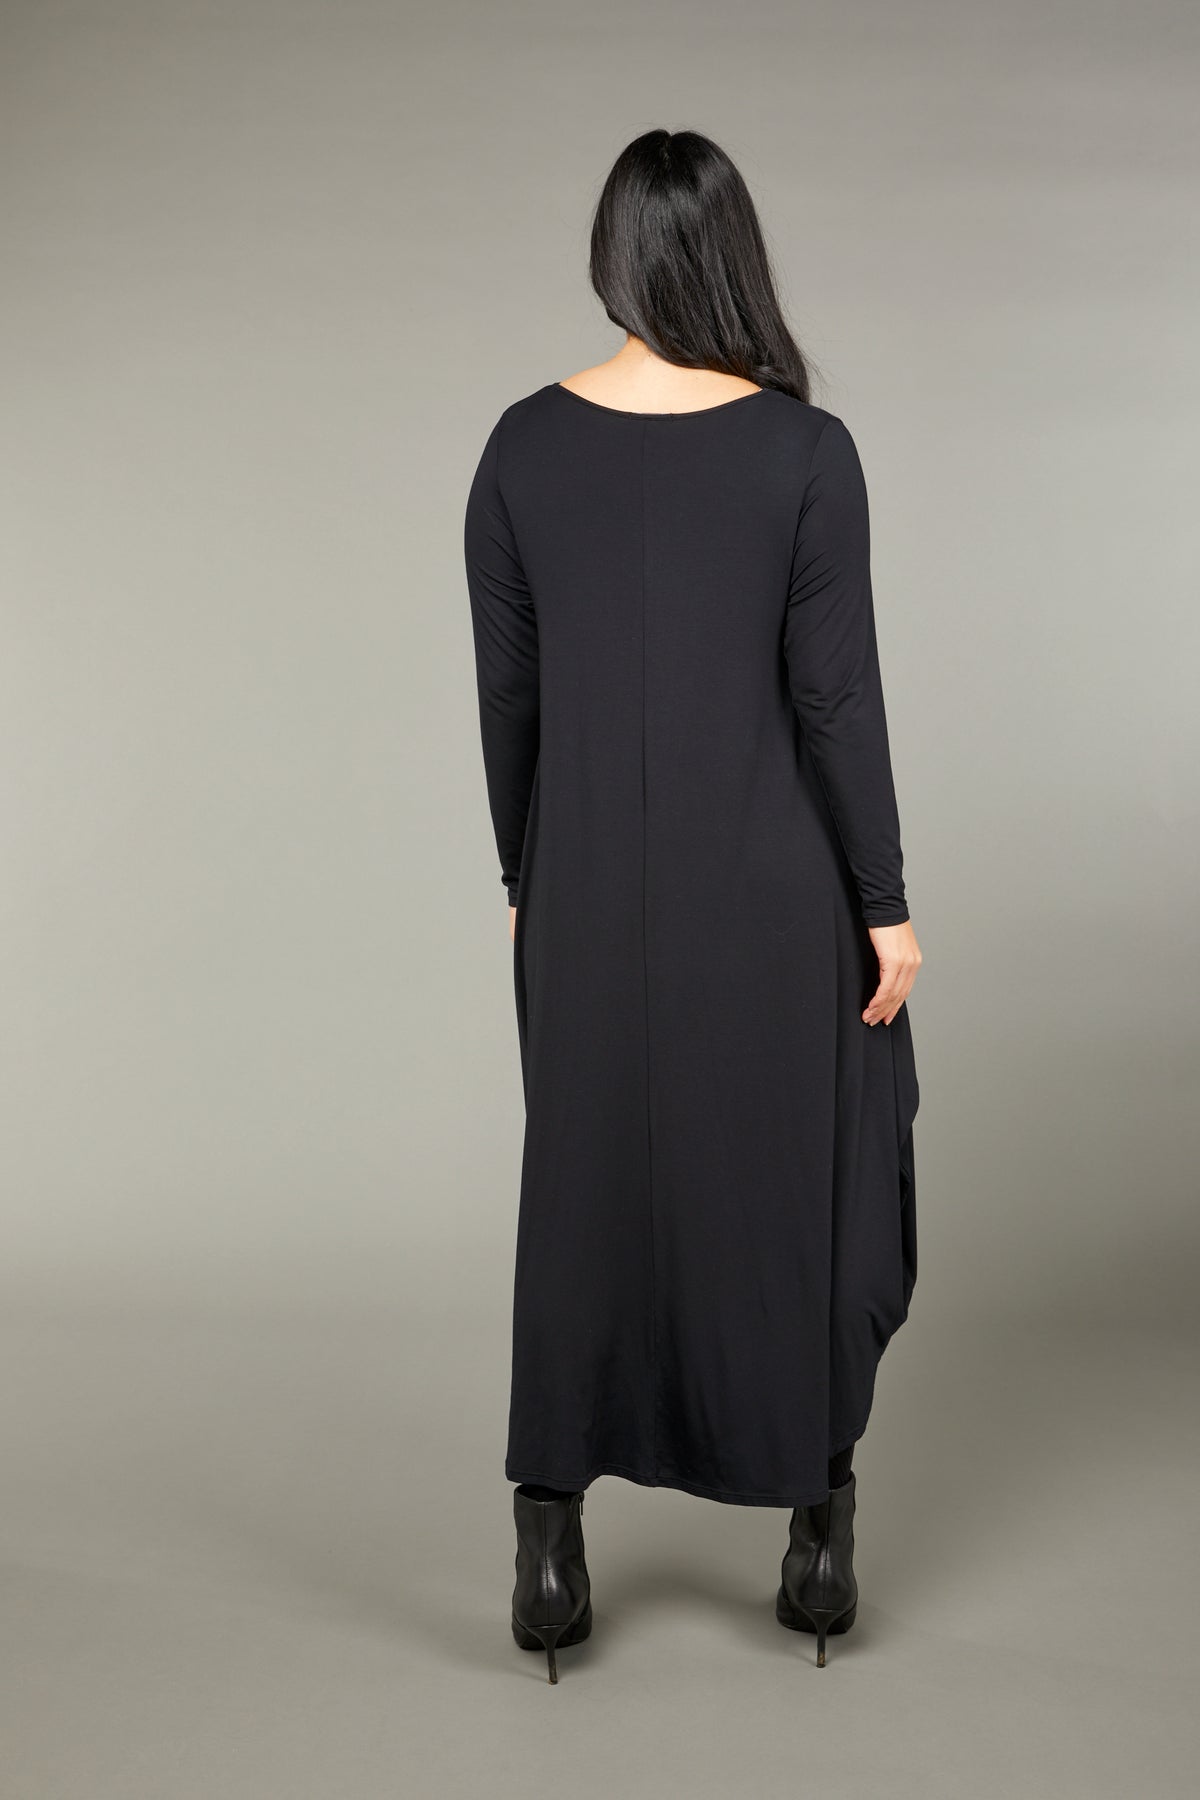 Long Sleeve Tri Dress Black